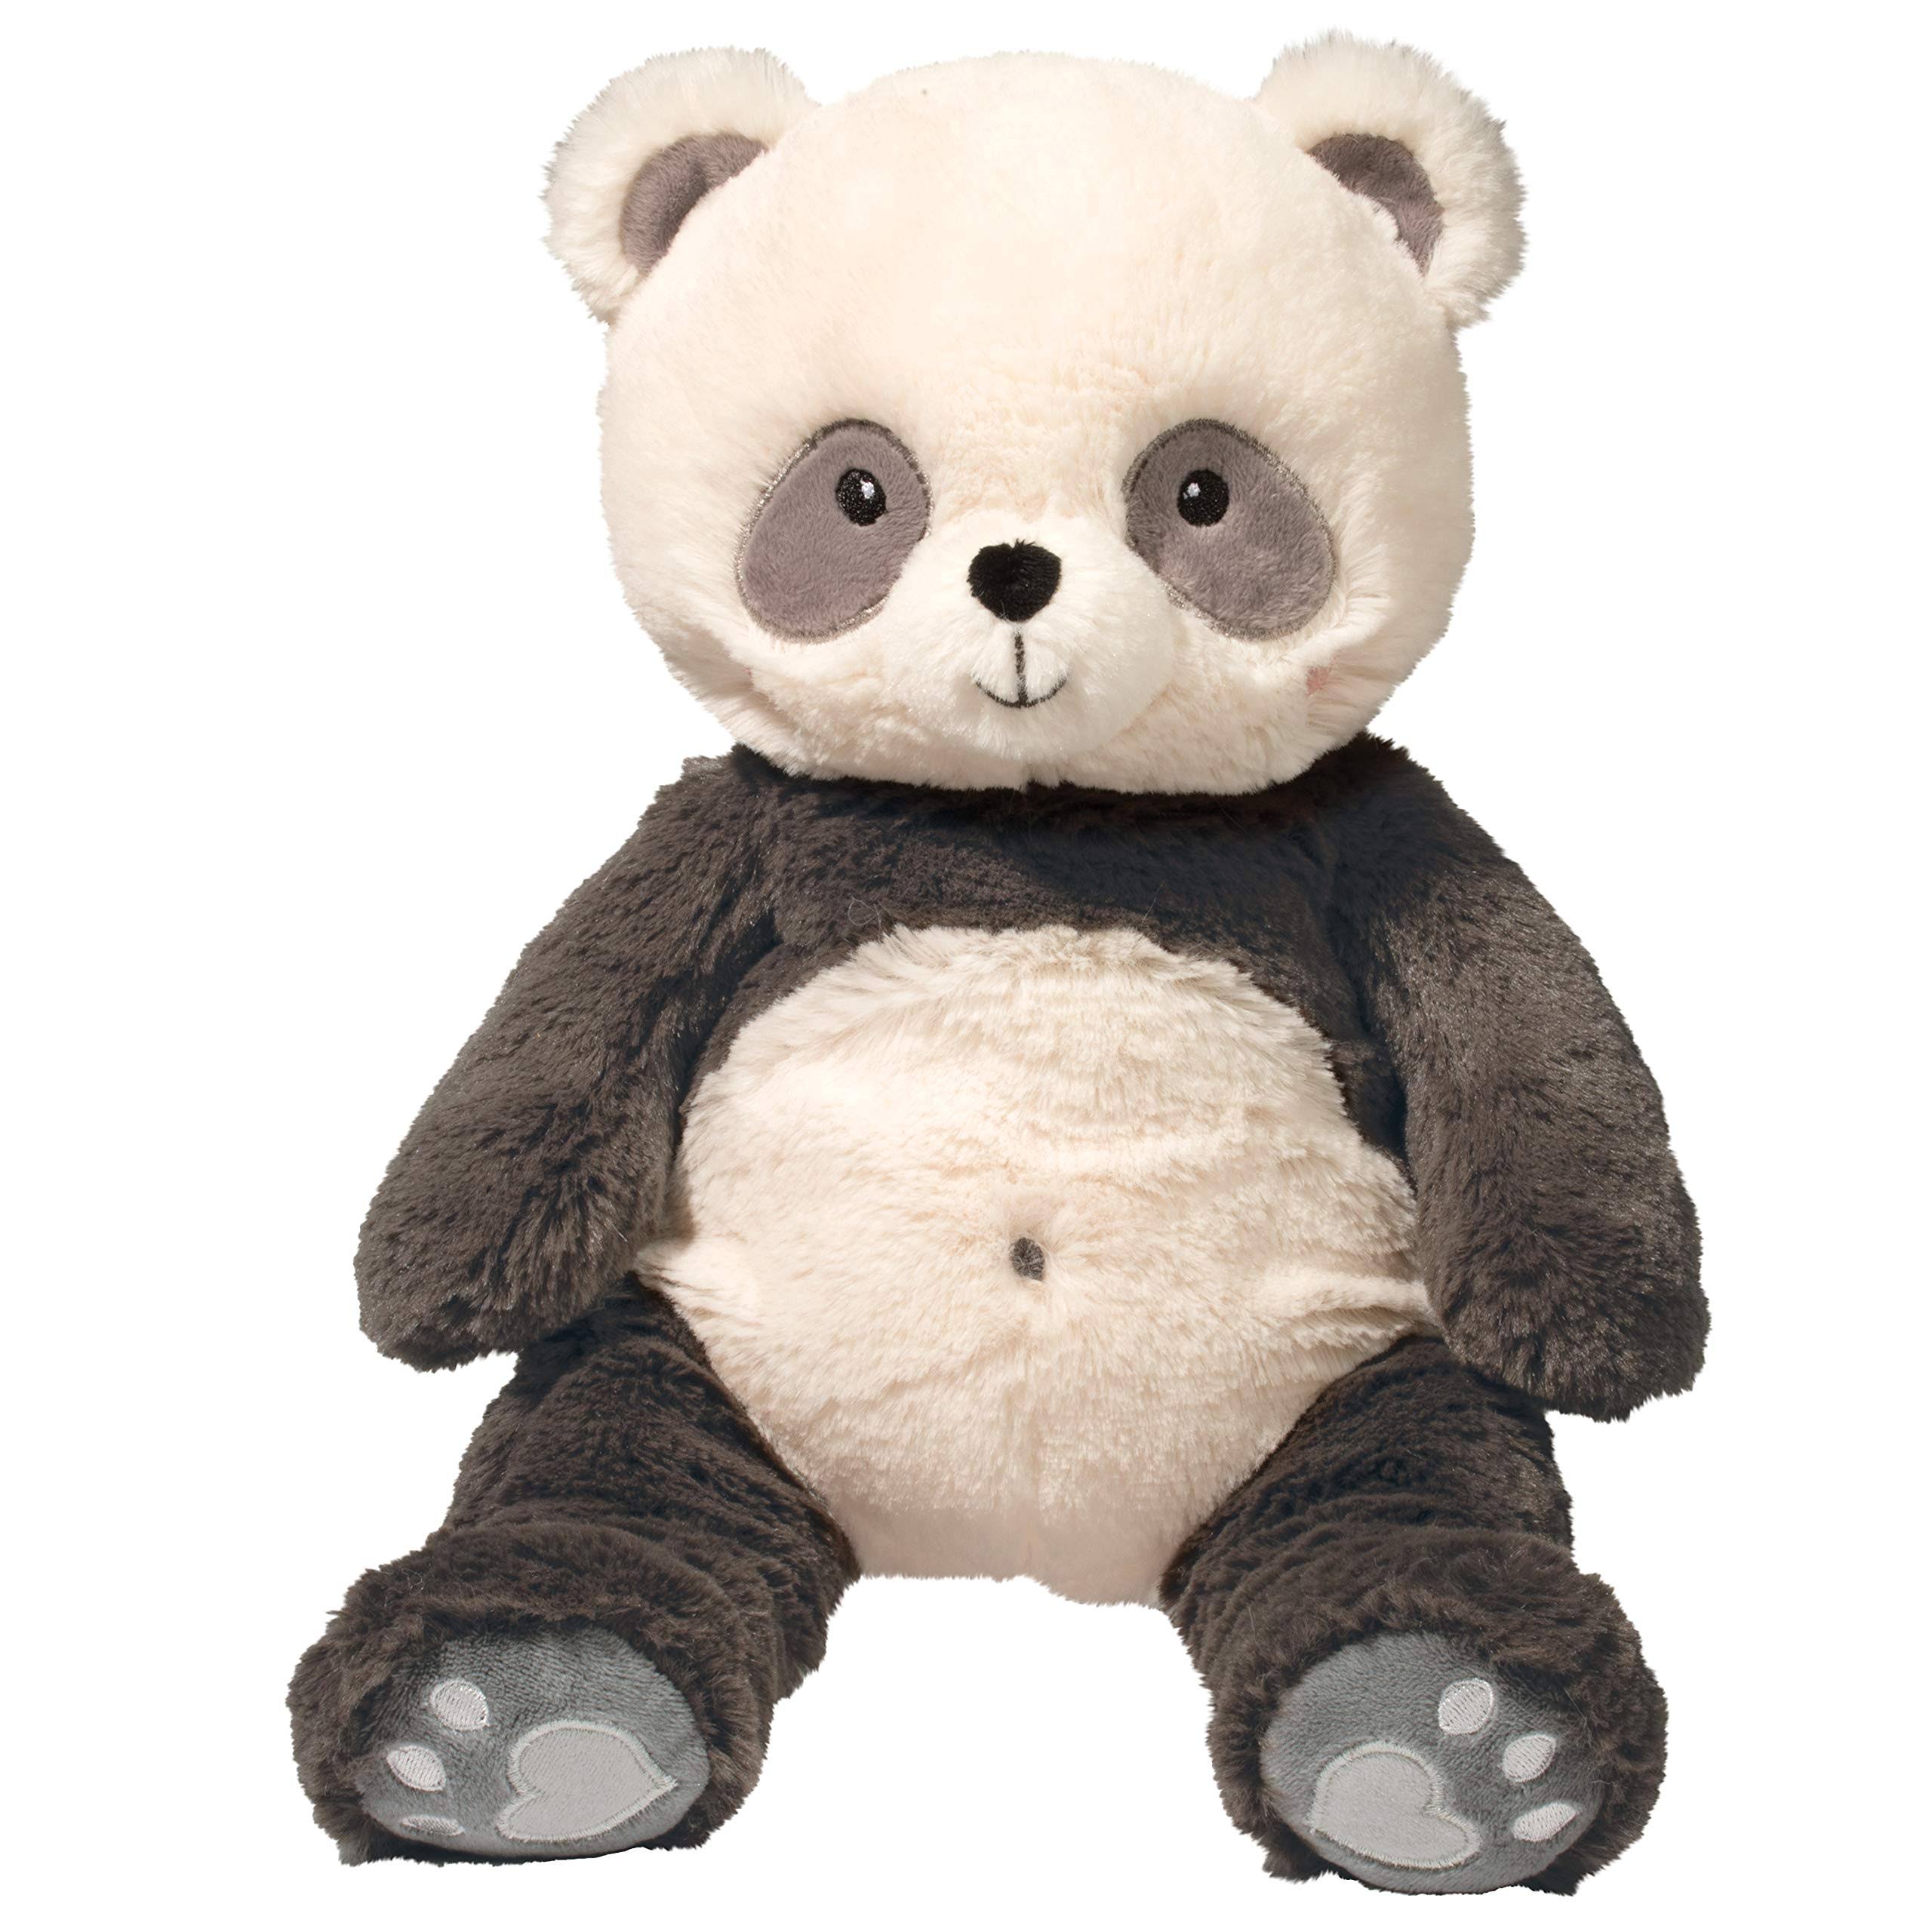 Douglas Panda Plumpie 10" by Mastermind Toys